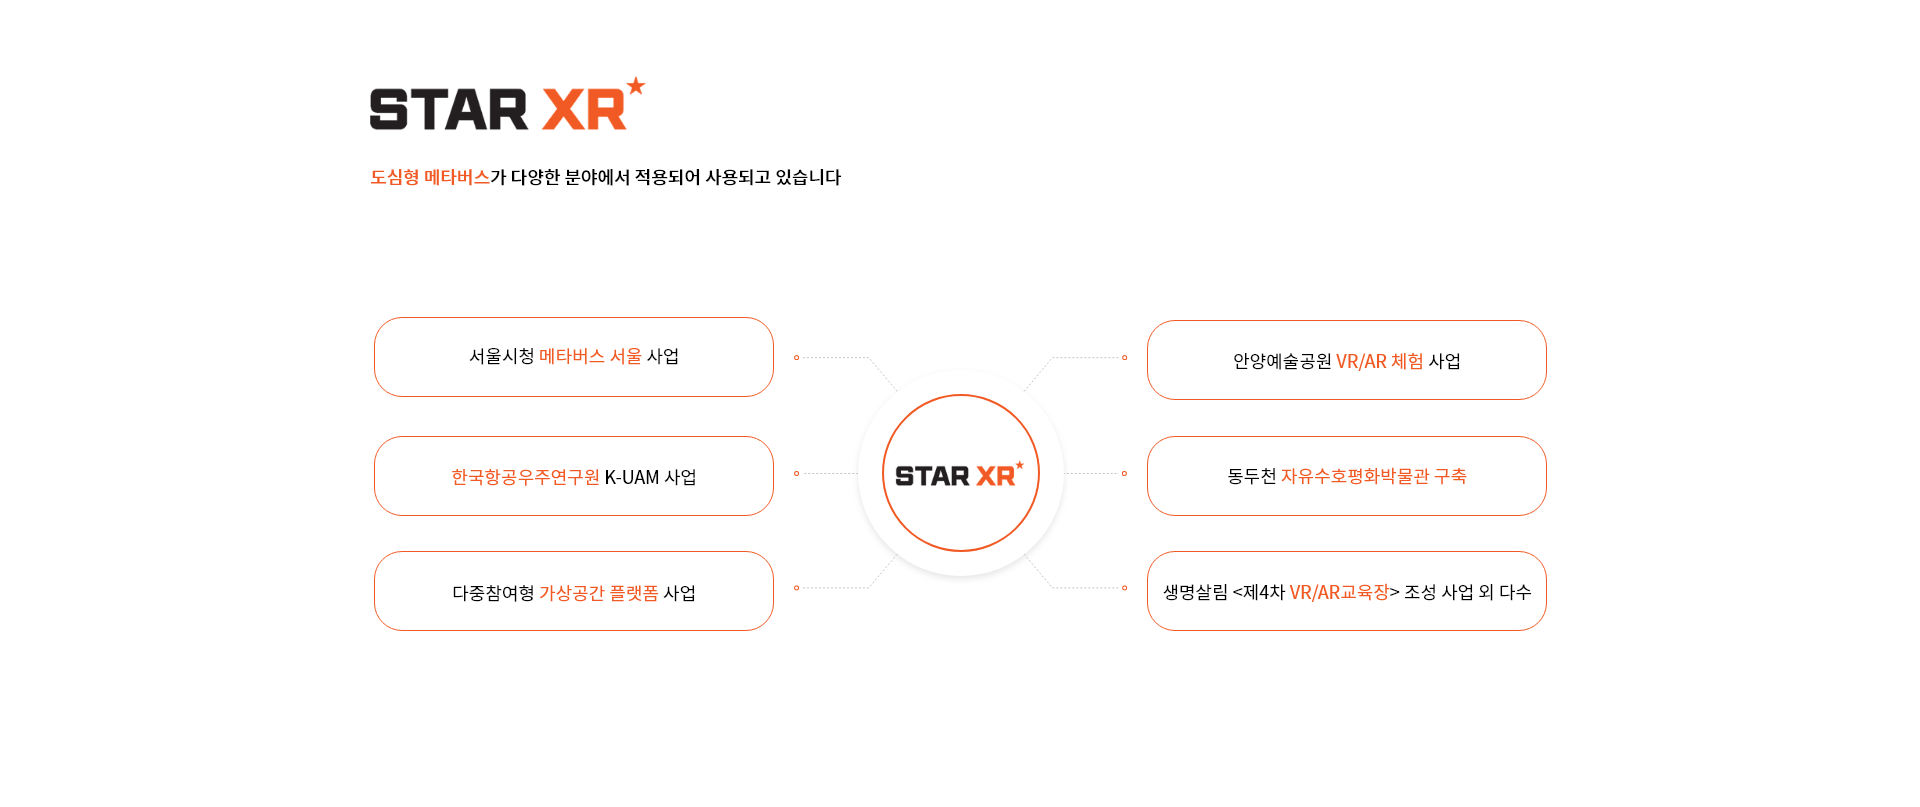 STAR XR - 콘텐츠 저작도구 콘텐츠메이커, 메타월드 맵, 크리에이터/커머스 웹서비스